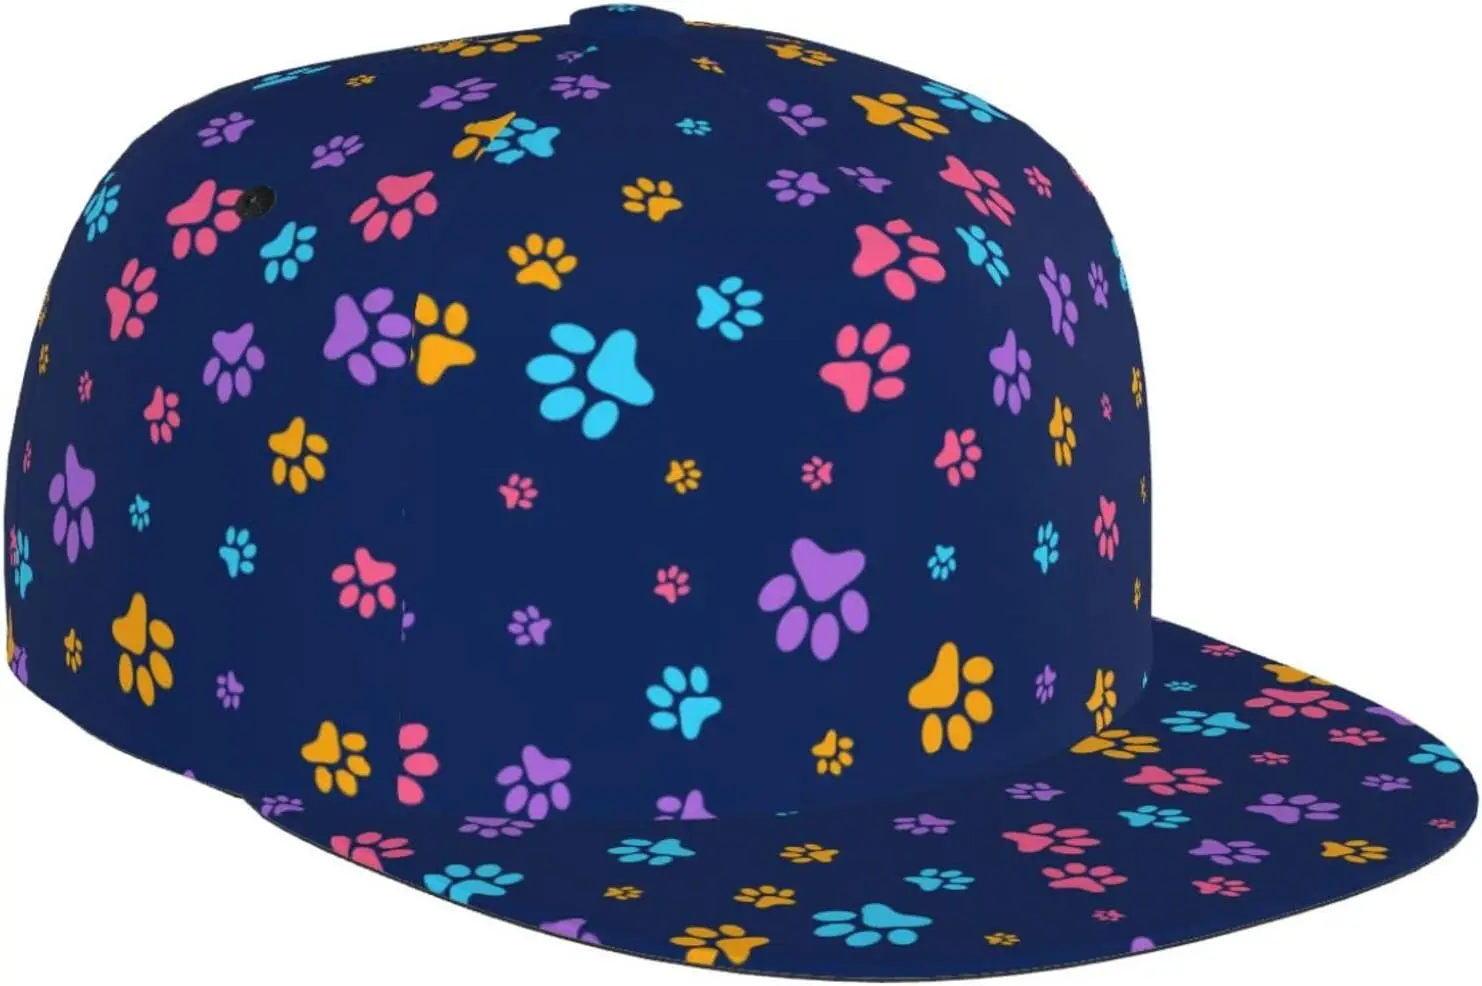 

Animal paw Print Flat Bill Hat, Unisex Snapback Baseball Cap Hip Hop Style Flat Visor Blank Adjustable Black